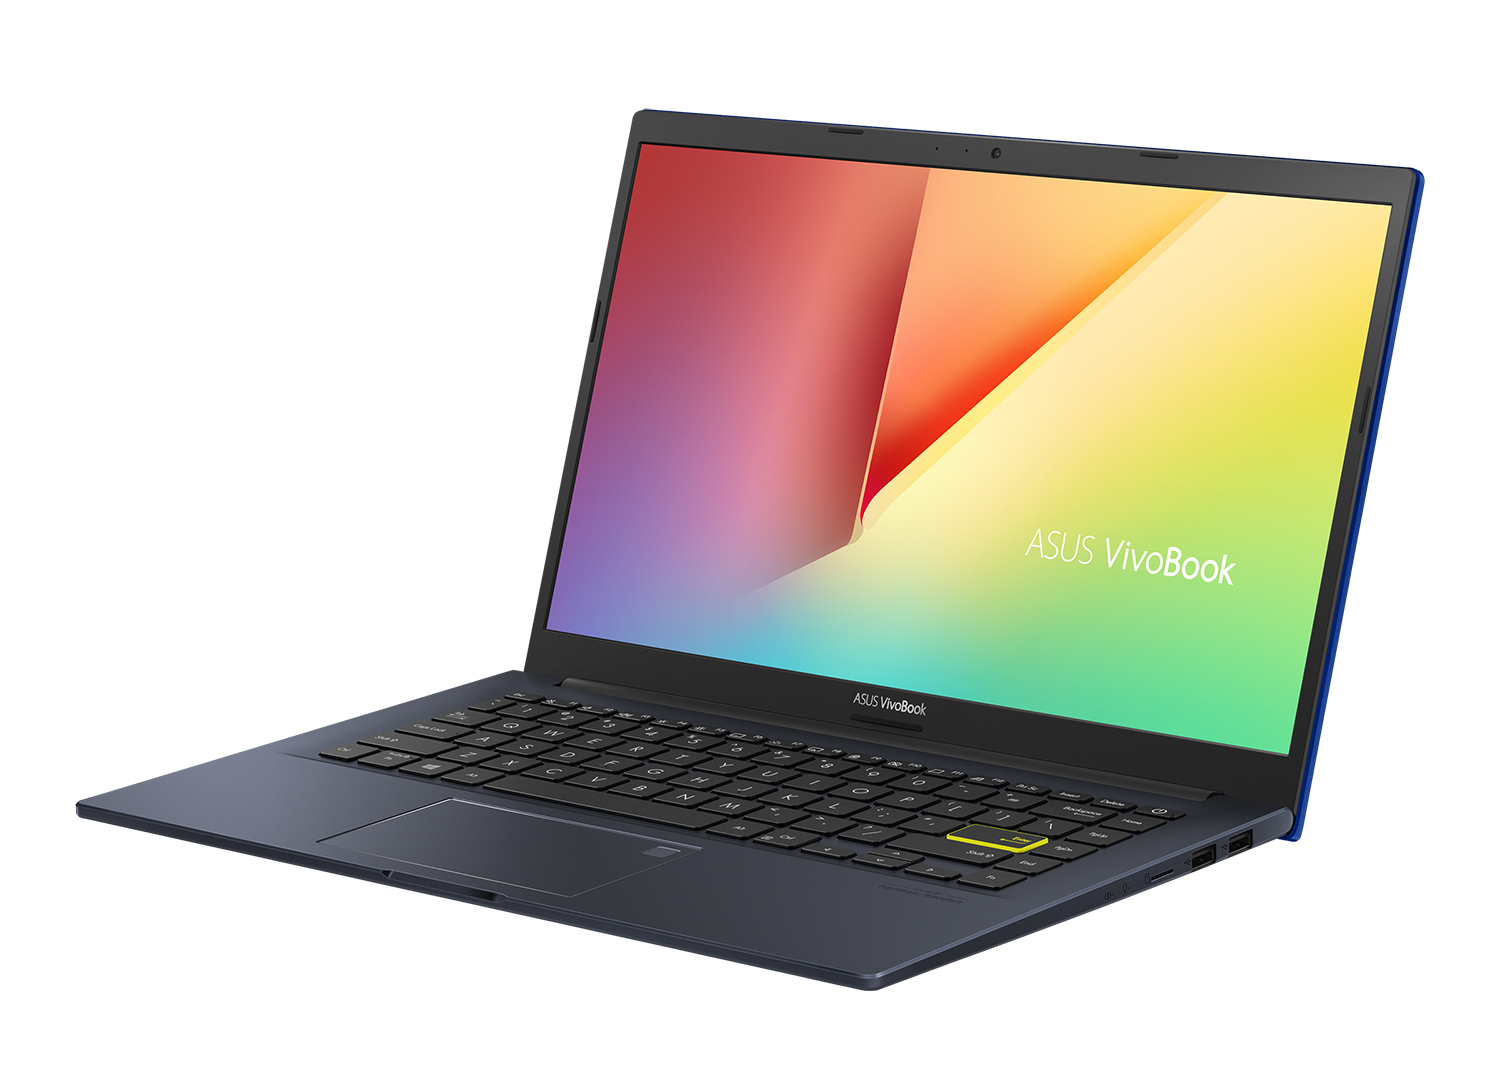 ASUS VivoBook 14 M413 Everyday Value Laptop (AMD Ryzen 5 3500U 4-Core, 8GB RAM, 1TB PCIe SSD, 14.0" Full HD (1920x1080), AMD Vega 8, Fingerprint, Wifi, Bluetooth, Win 10 Pro) (Used) - image 2 of 3